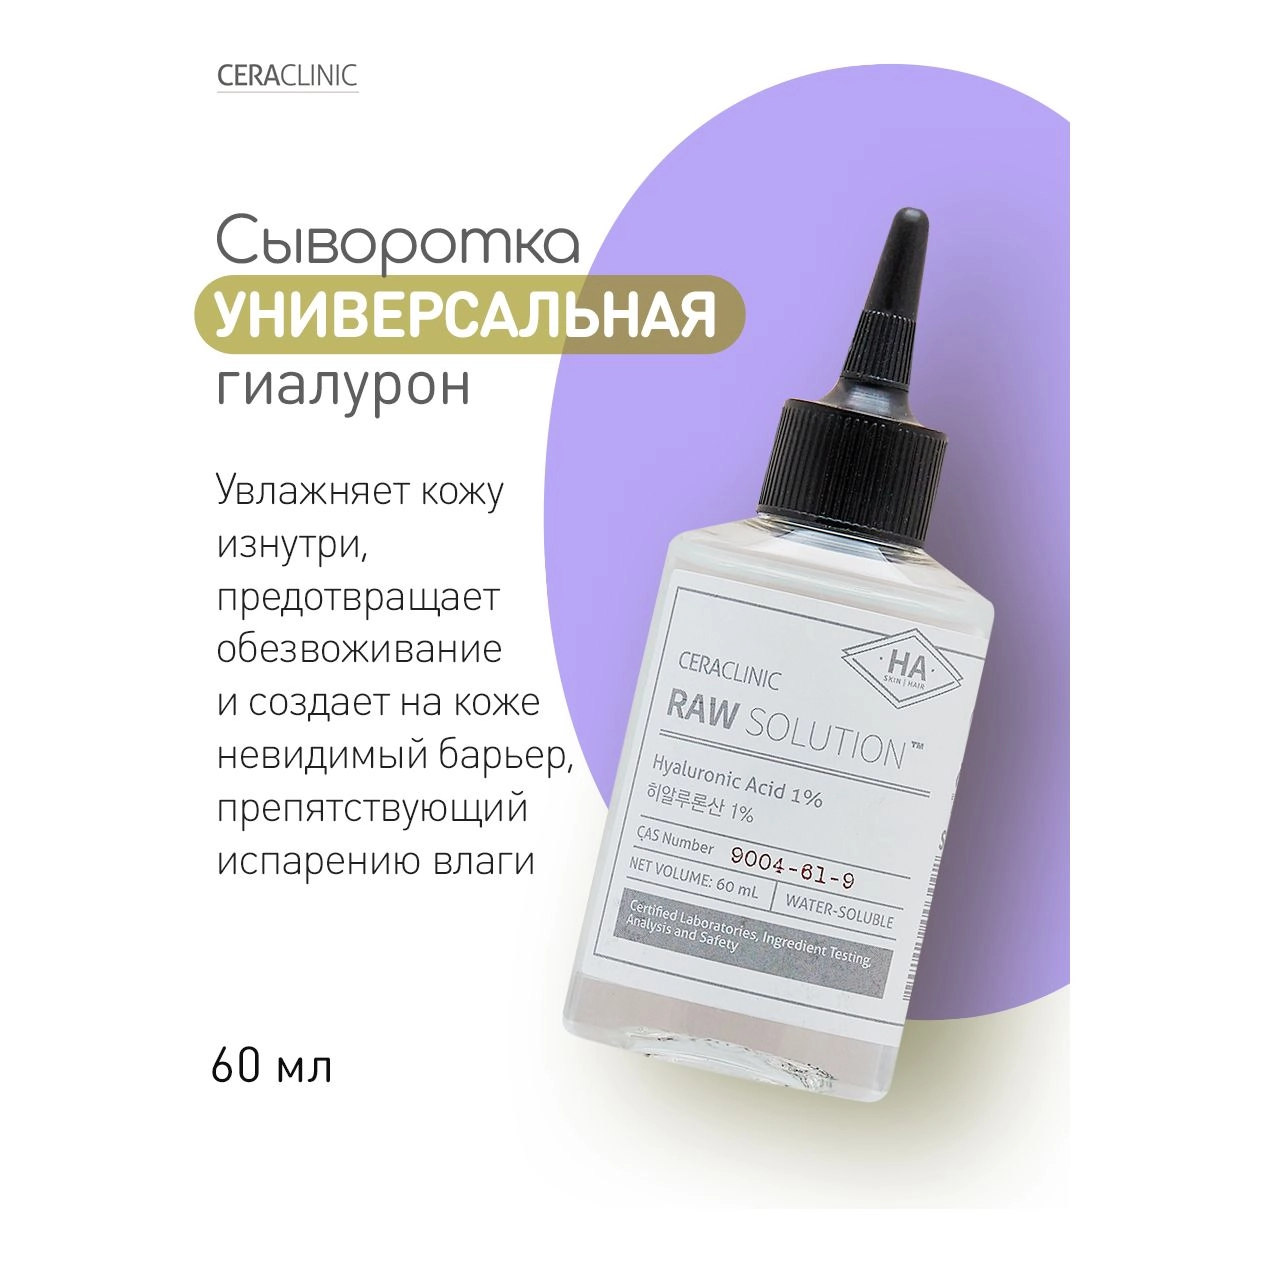 Сыворотка Универсальная Гиалурон - Ceraclinic Raw Solution Hyaluronic Acid 1%, 60 мл - фото N4